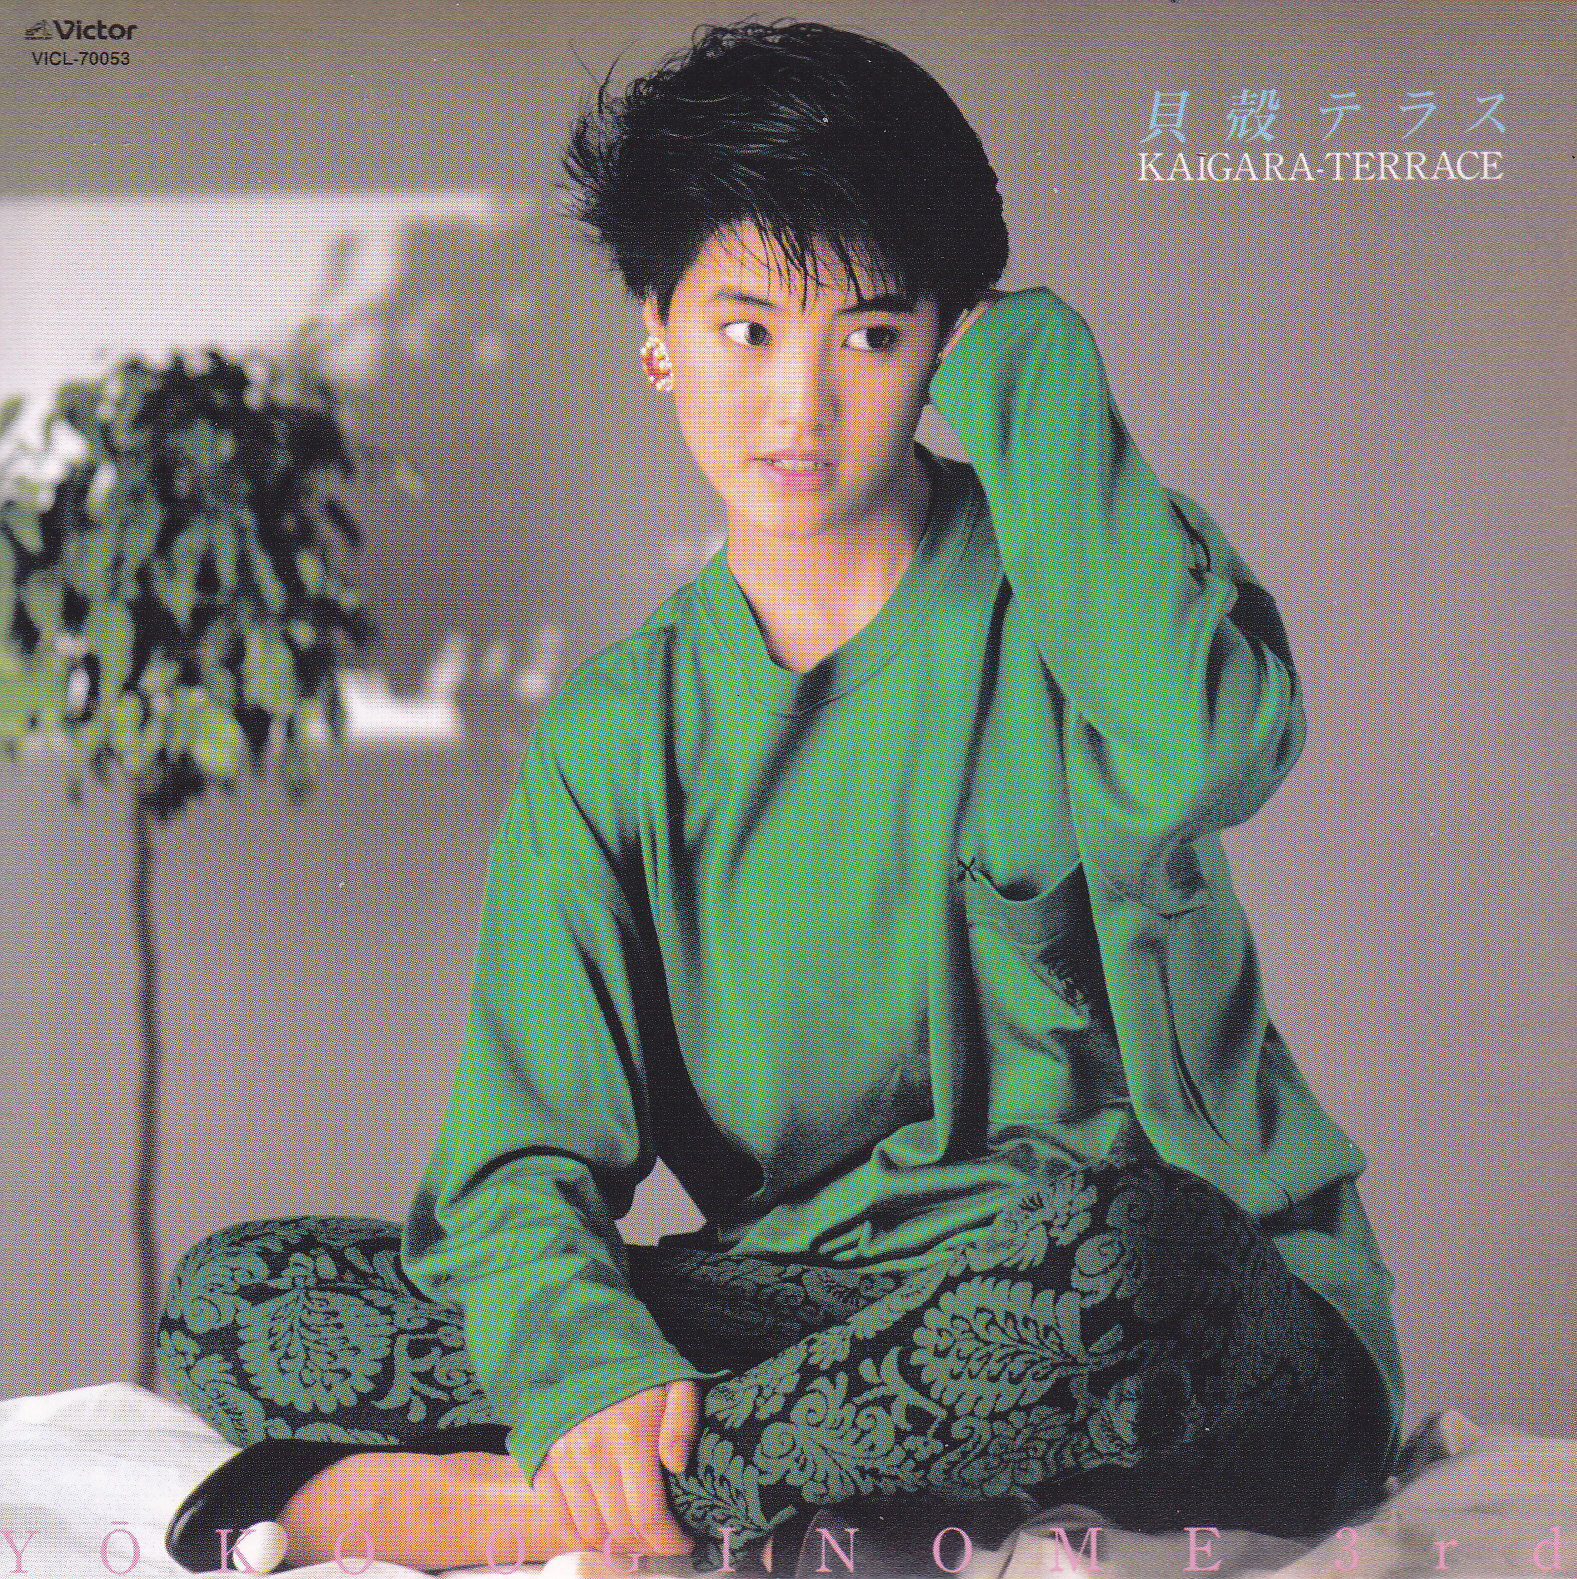 20170820.0956.7 Yoko Oginome - Kaigara Terrace (1985) cover.jpg